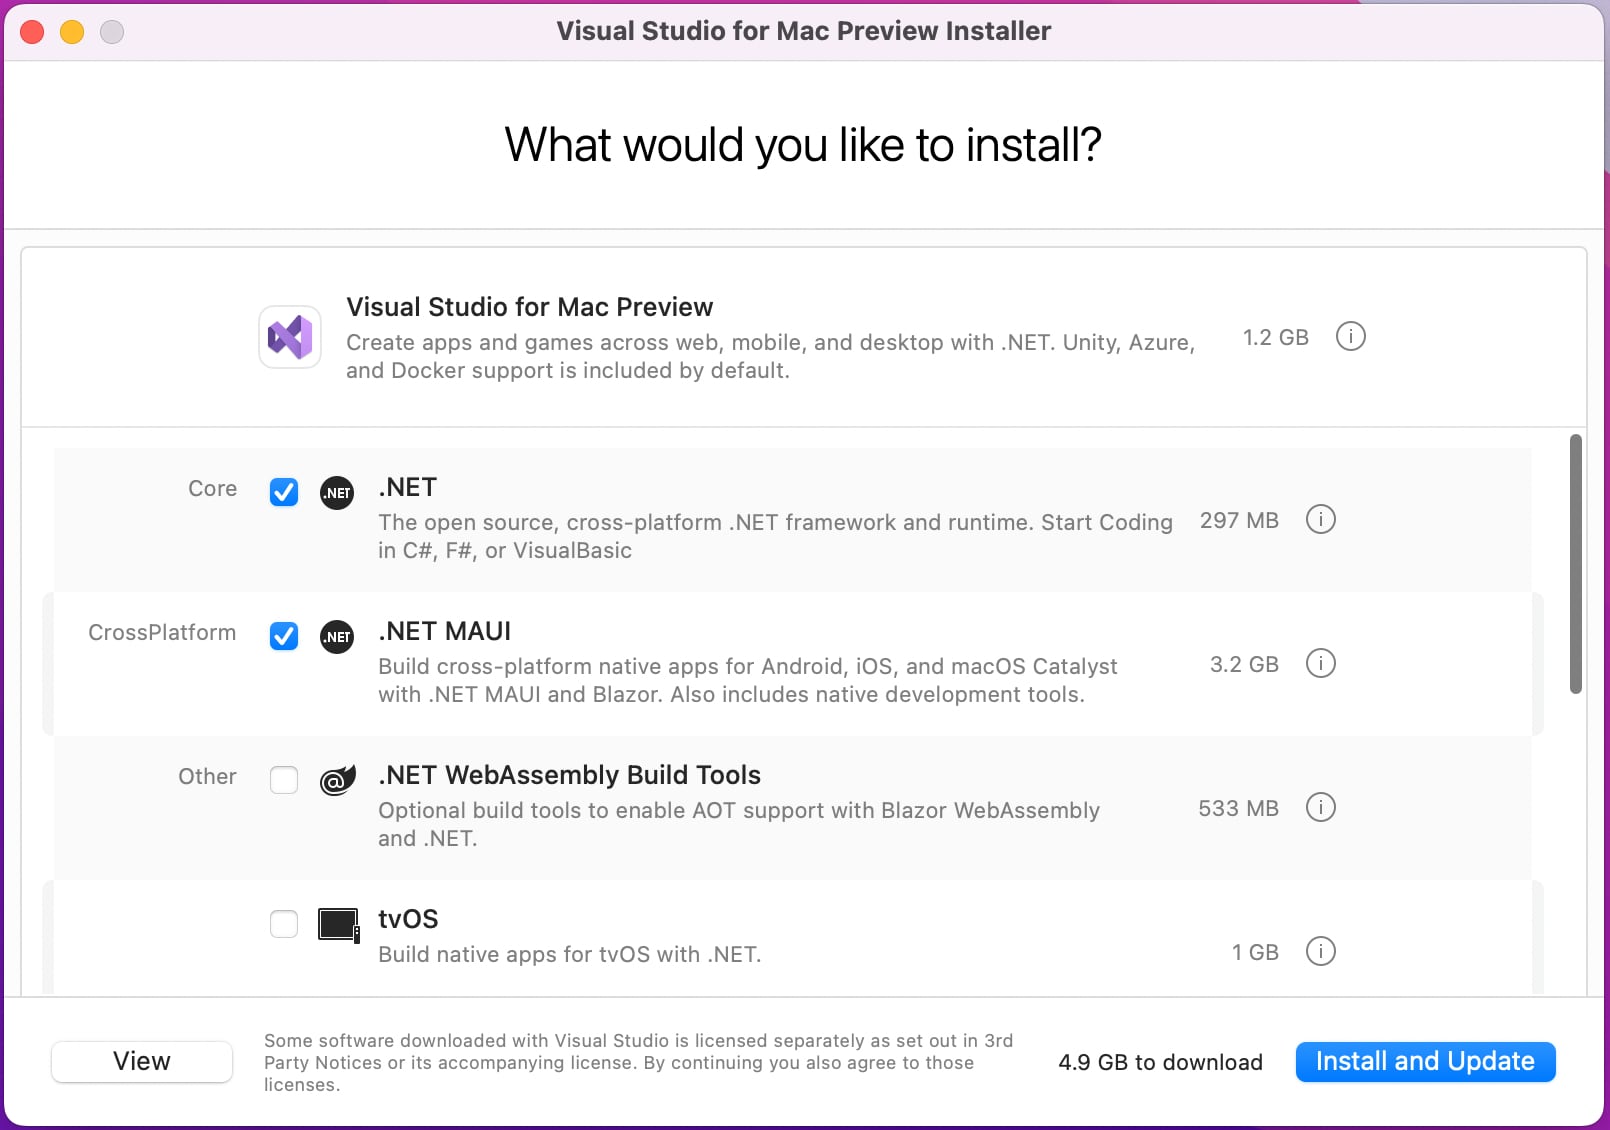 Visual Studio 2022 for Mac Preview Installer